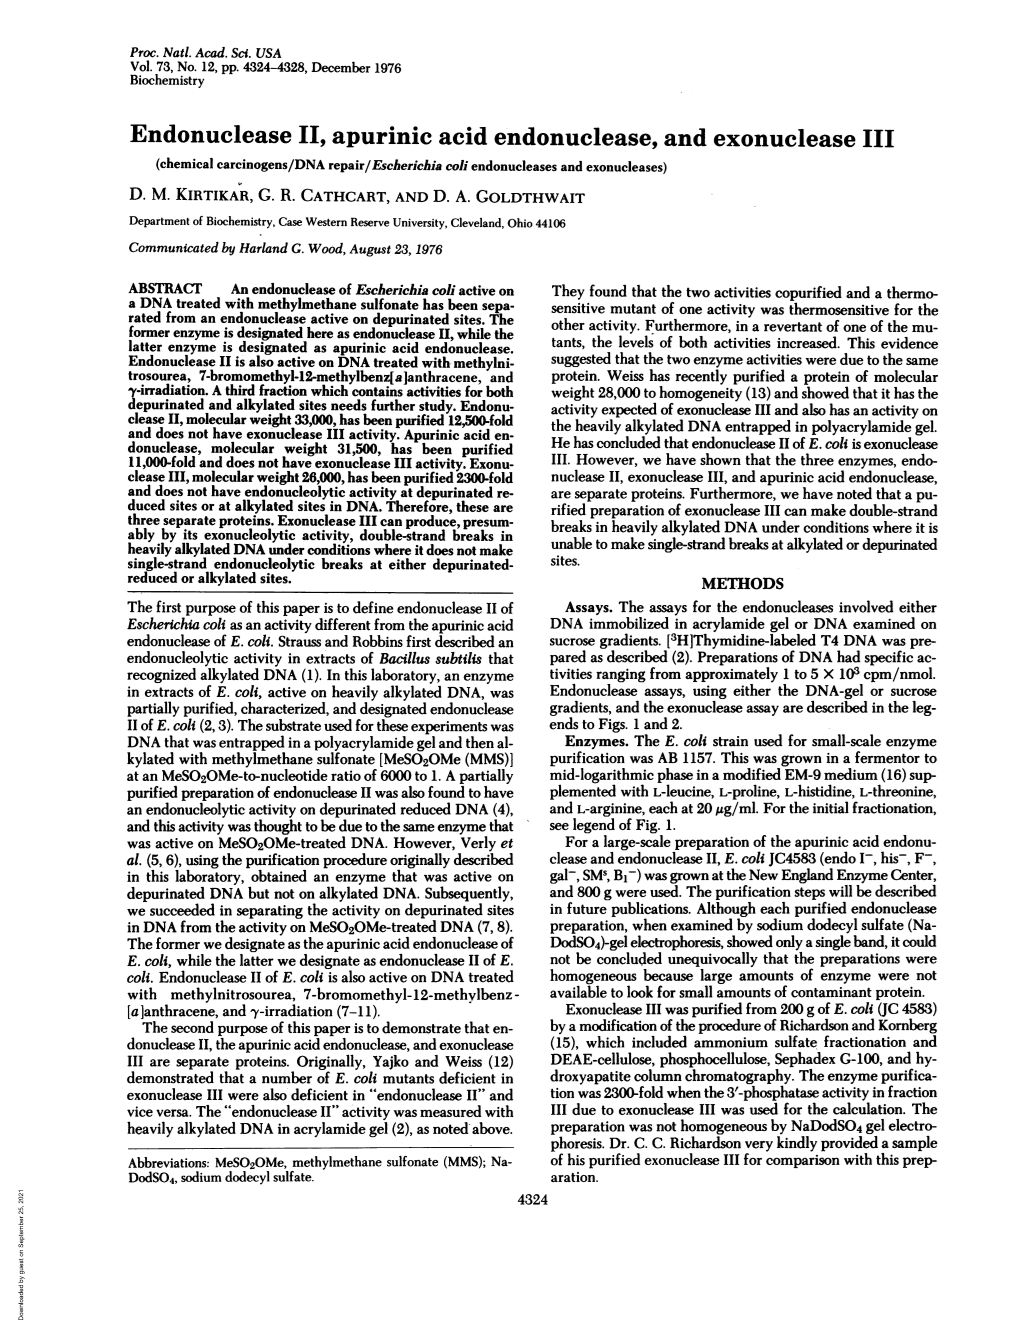 Endonuclease II, Apurinic Acid Endonuclease, and Exonuclease III (Chemical Carcinogens/DNA Repair/Escherichia Coli Endonucleases and Exonucleases) D